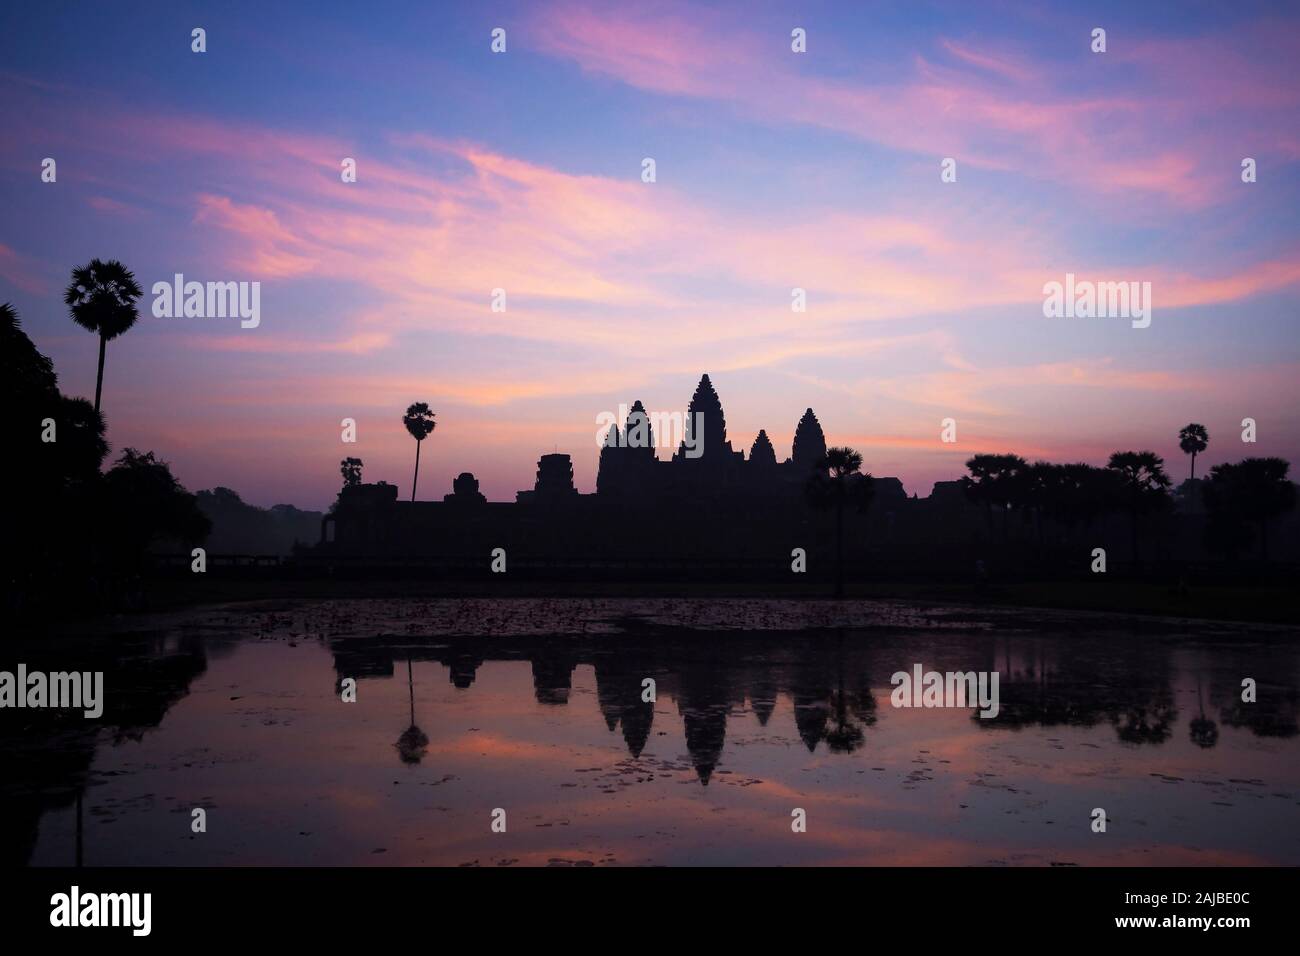 Tempel Angkor Wat bei Sonnenaufgang in Siem Reap, Kambodscha. Stockfoto